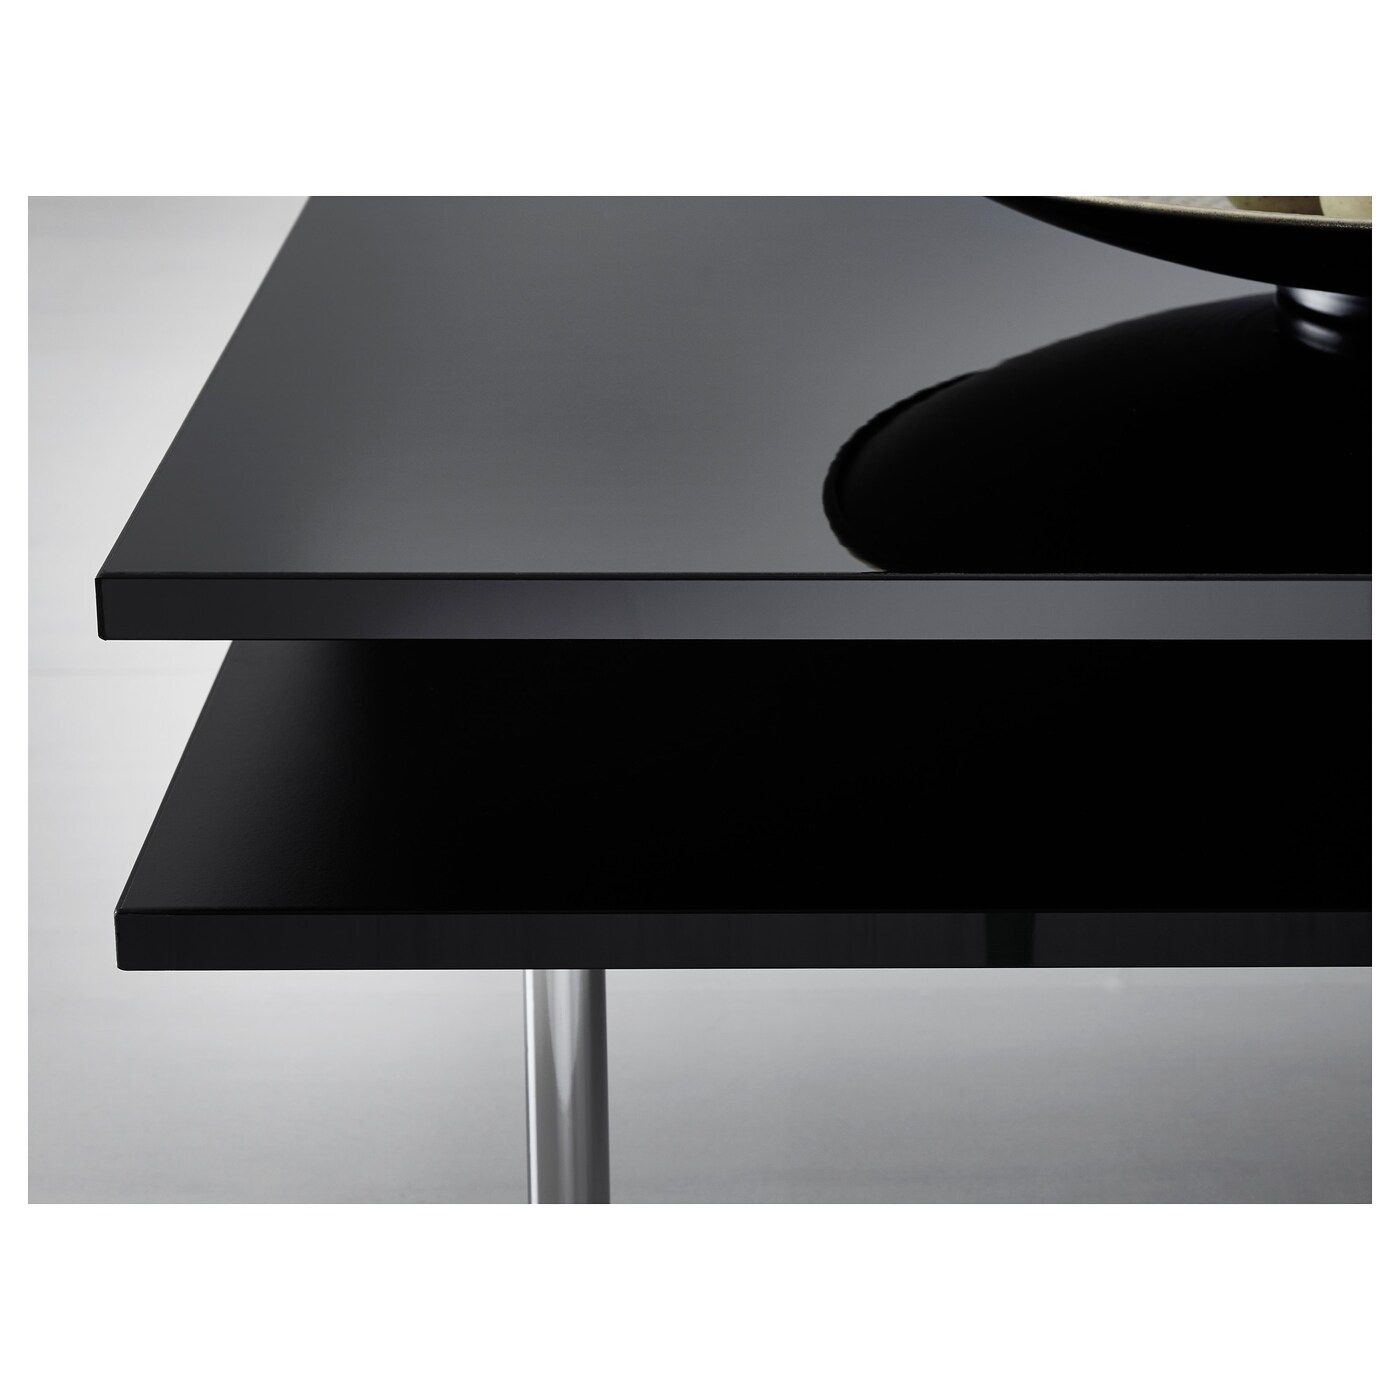 Tofteryd Coffee Table, High Gloss Black, 95x95 Cm – Ikea With High Gloss Black Coffee Tables (View 8 of 15)